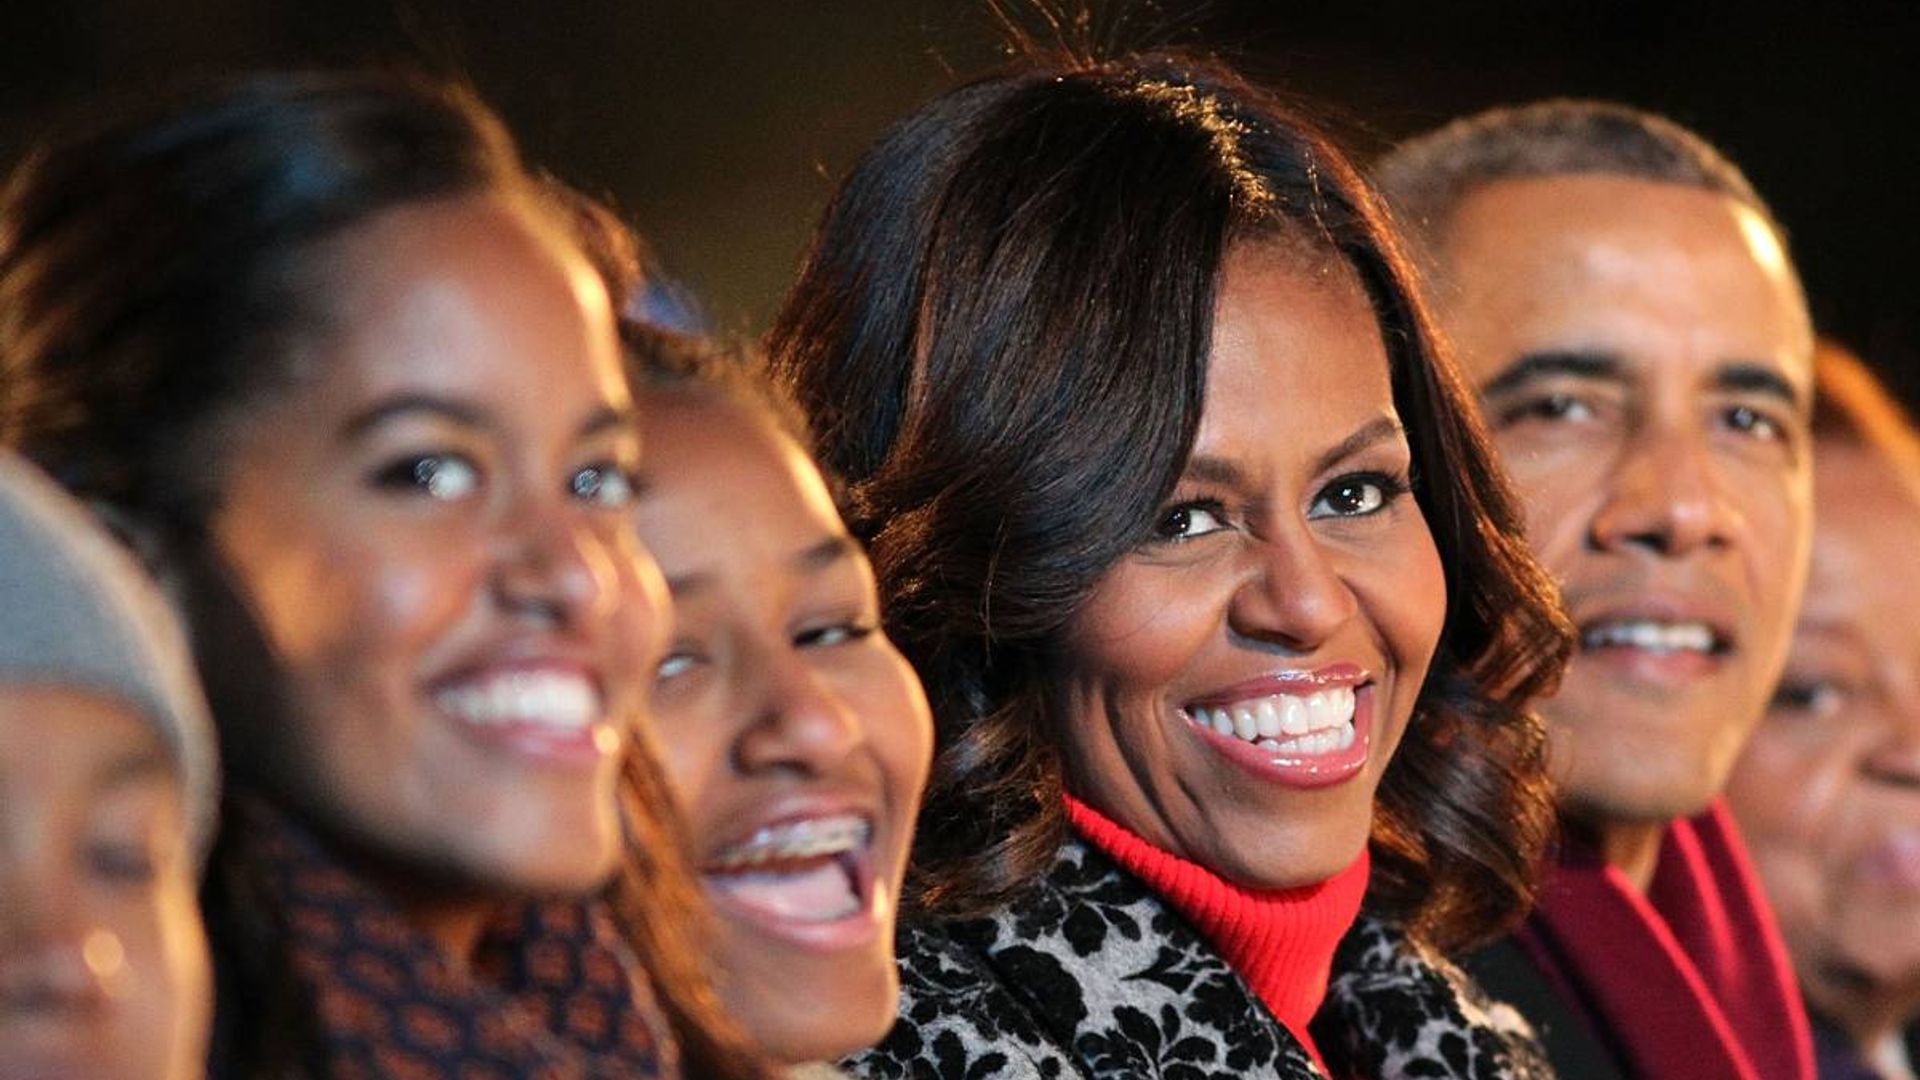 Michelle Obama shares poignant family photo featuring daughters Malia and Sasha